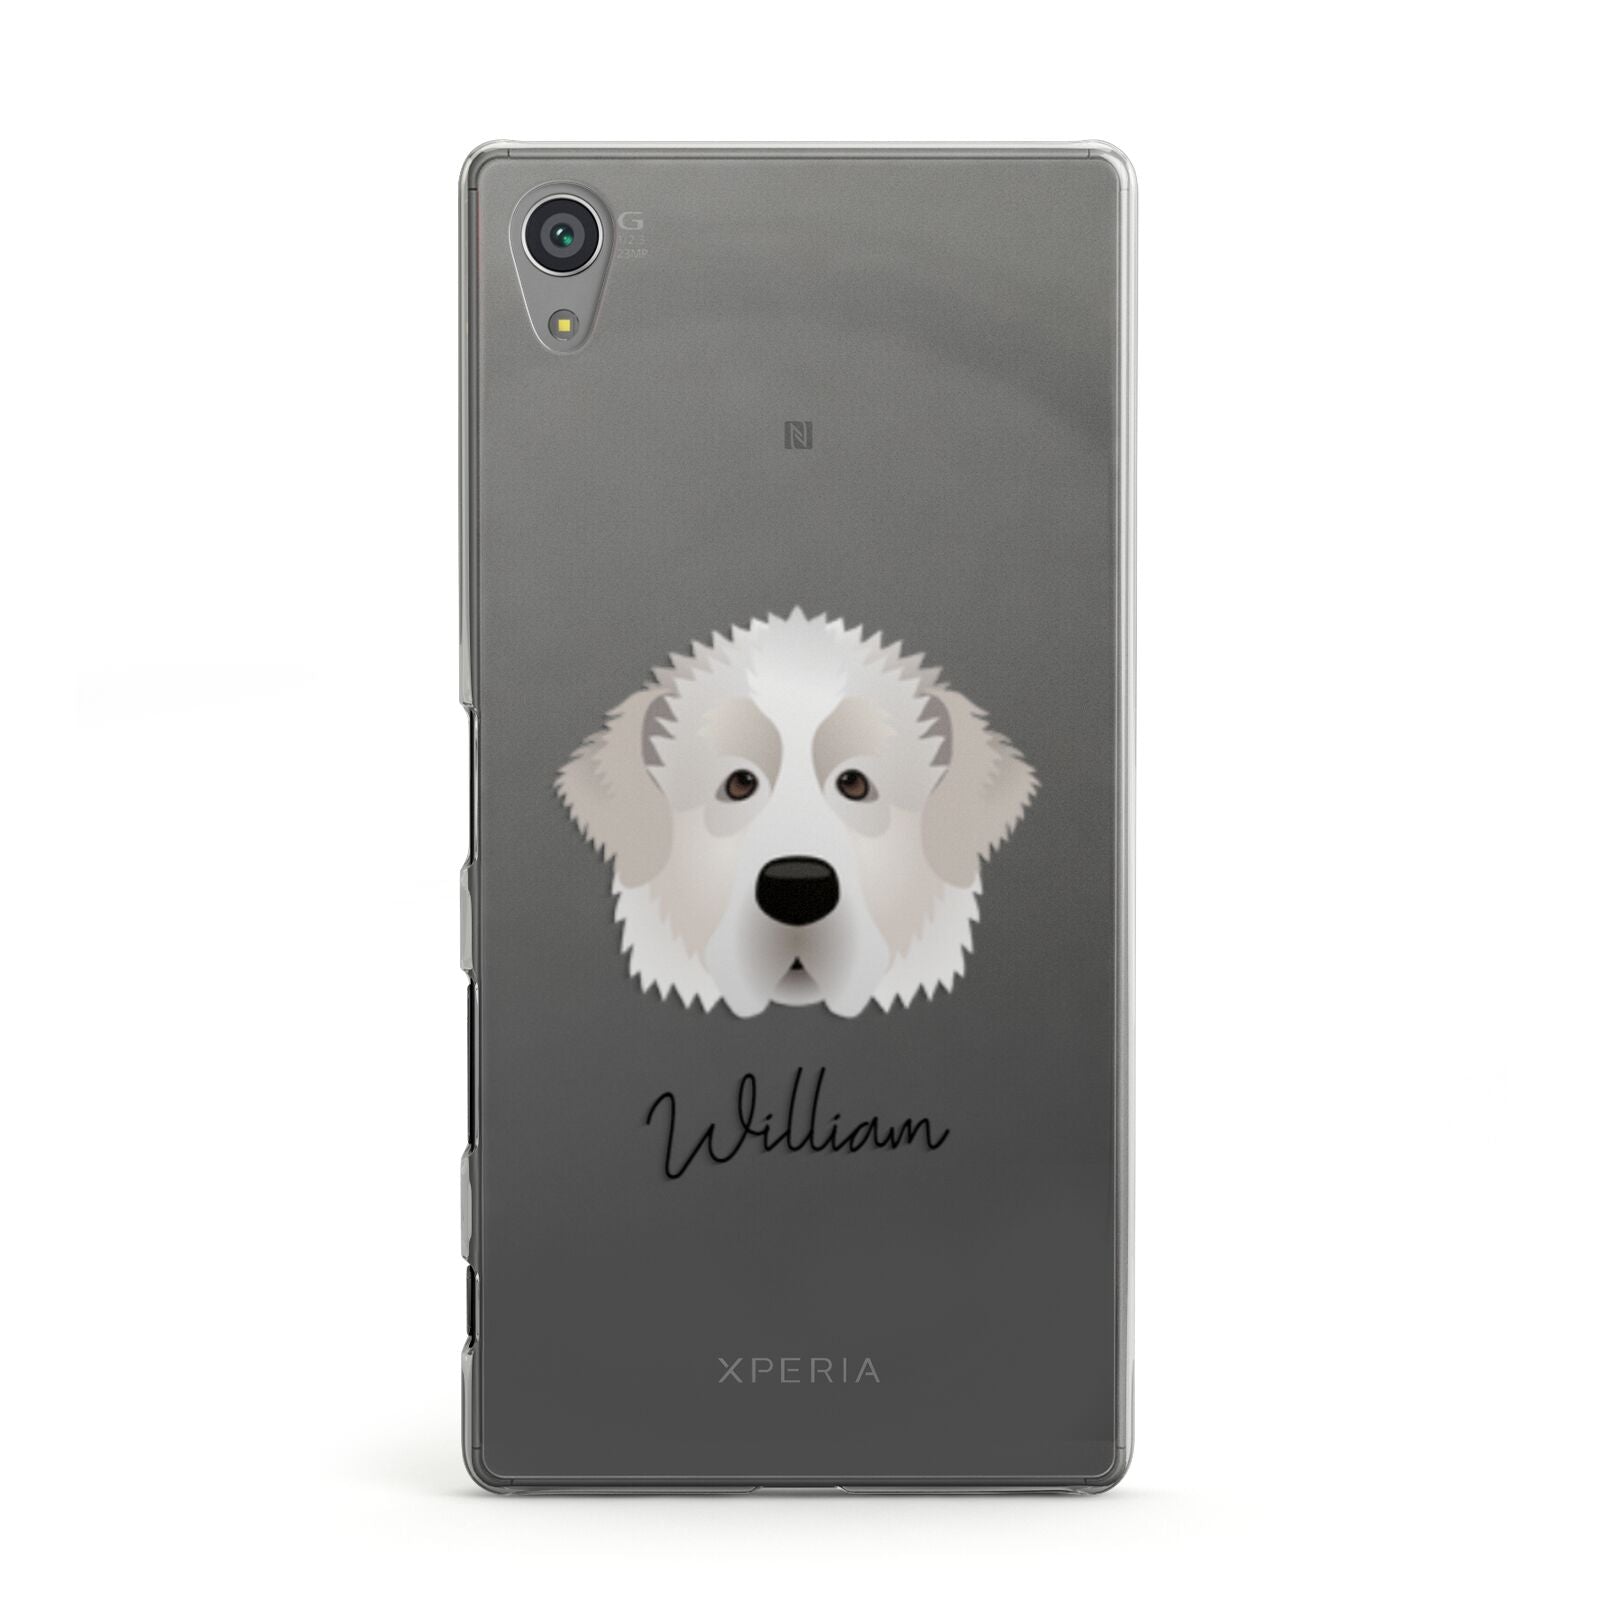 Pyrenean Mastiff Personalised Sony Xperia Case